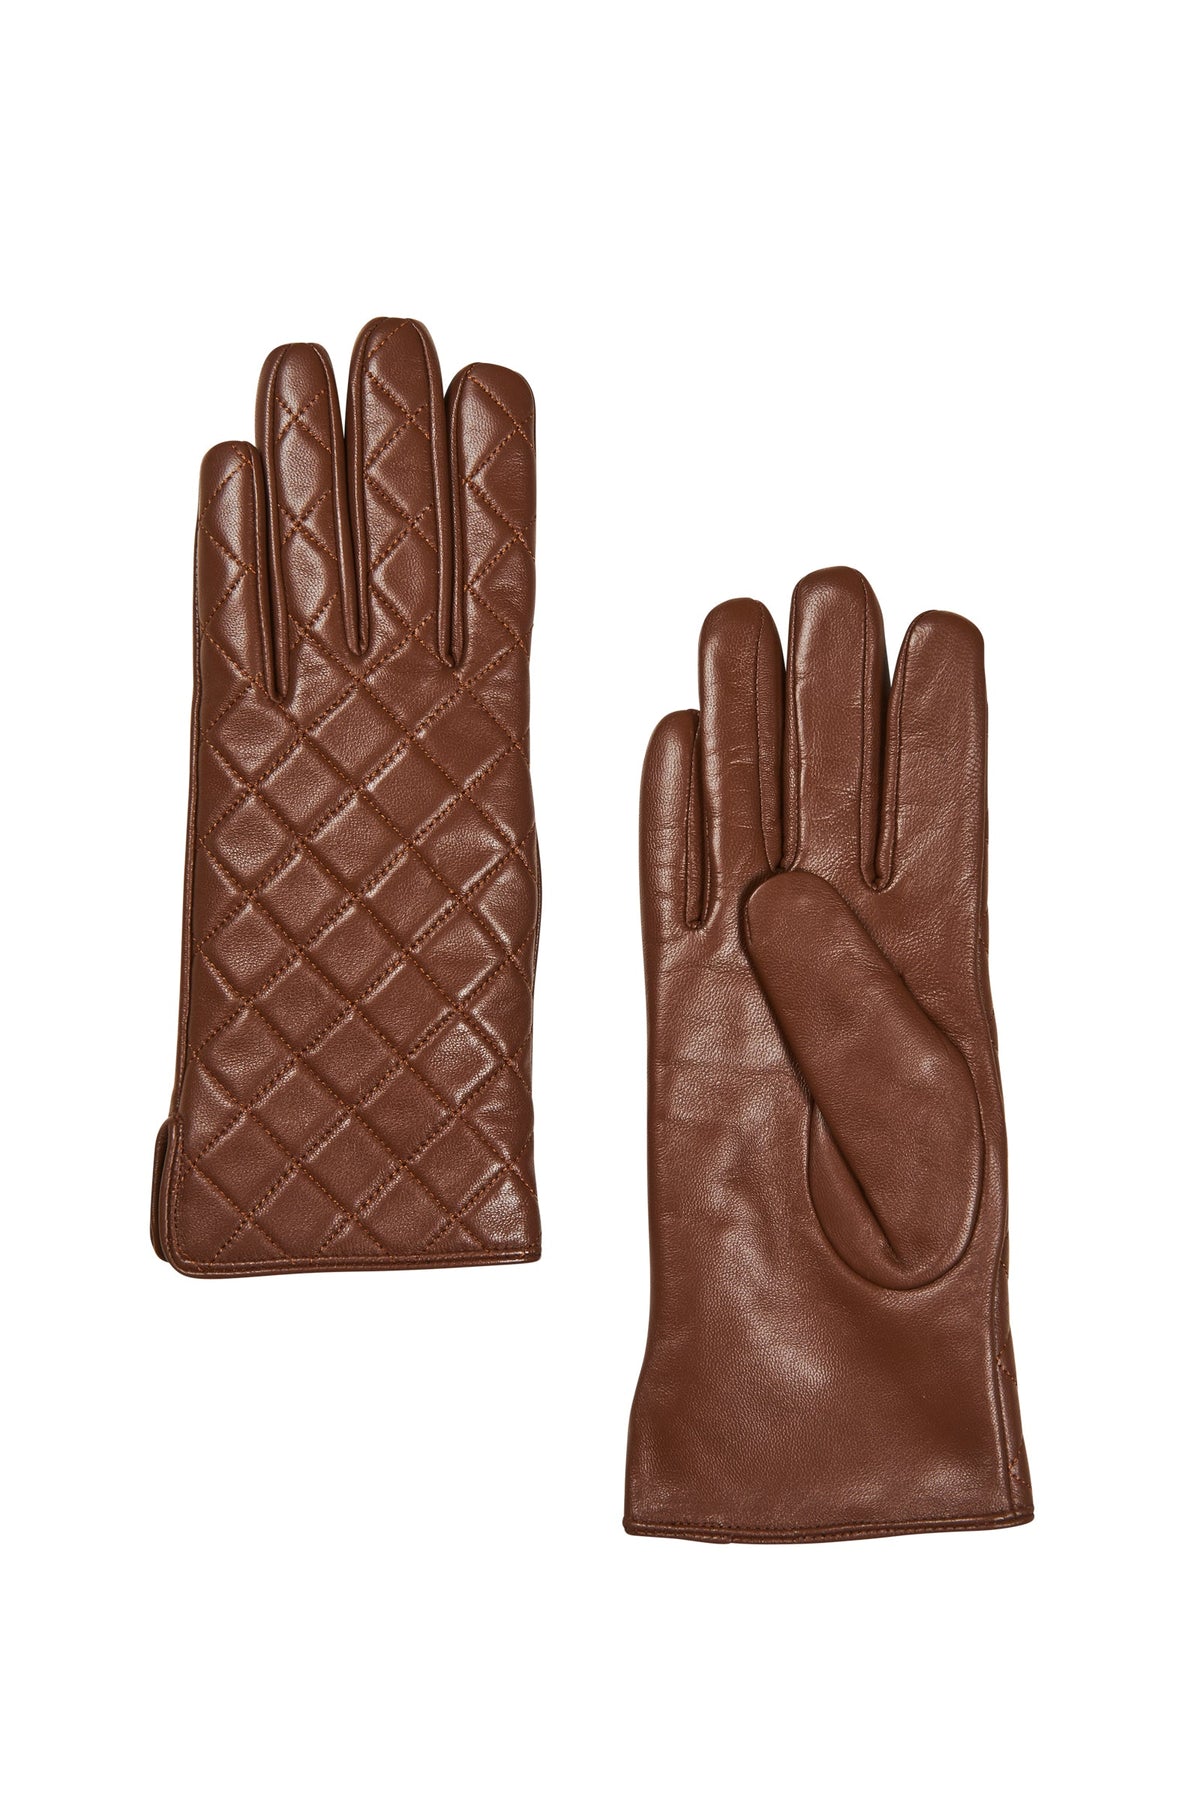 Bask Leather Glove in Caramel - EB & IVE Accessories NZ LUMA